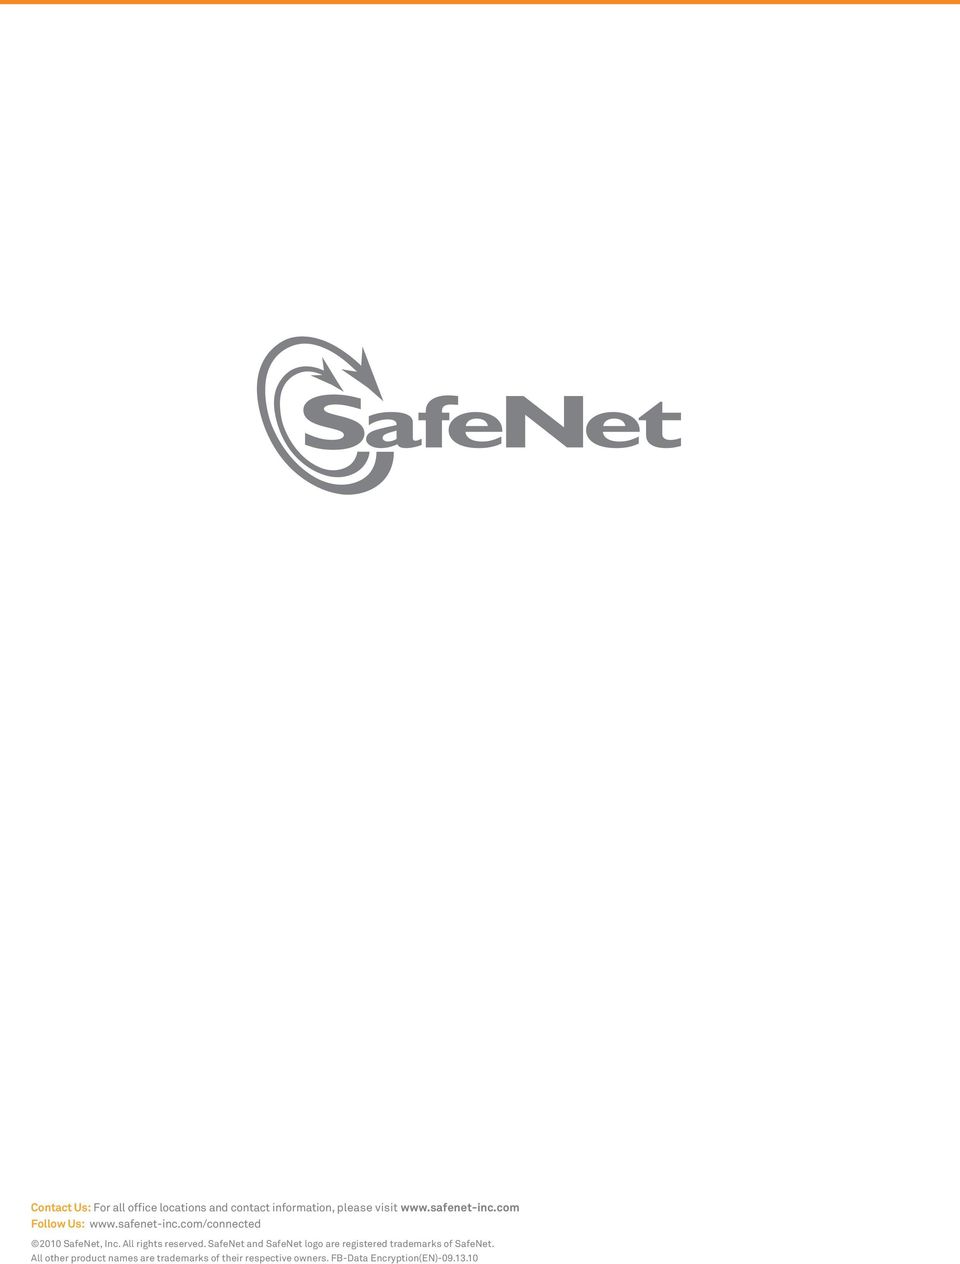 All rights reserved. SafeNet and SafeNet logo are registered trademarks of SafeNet.